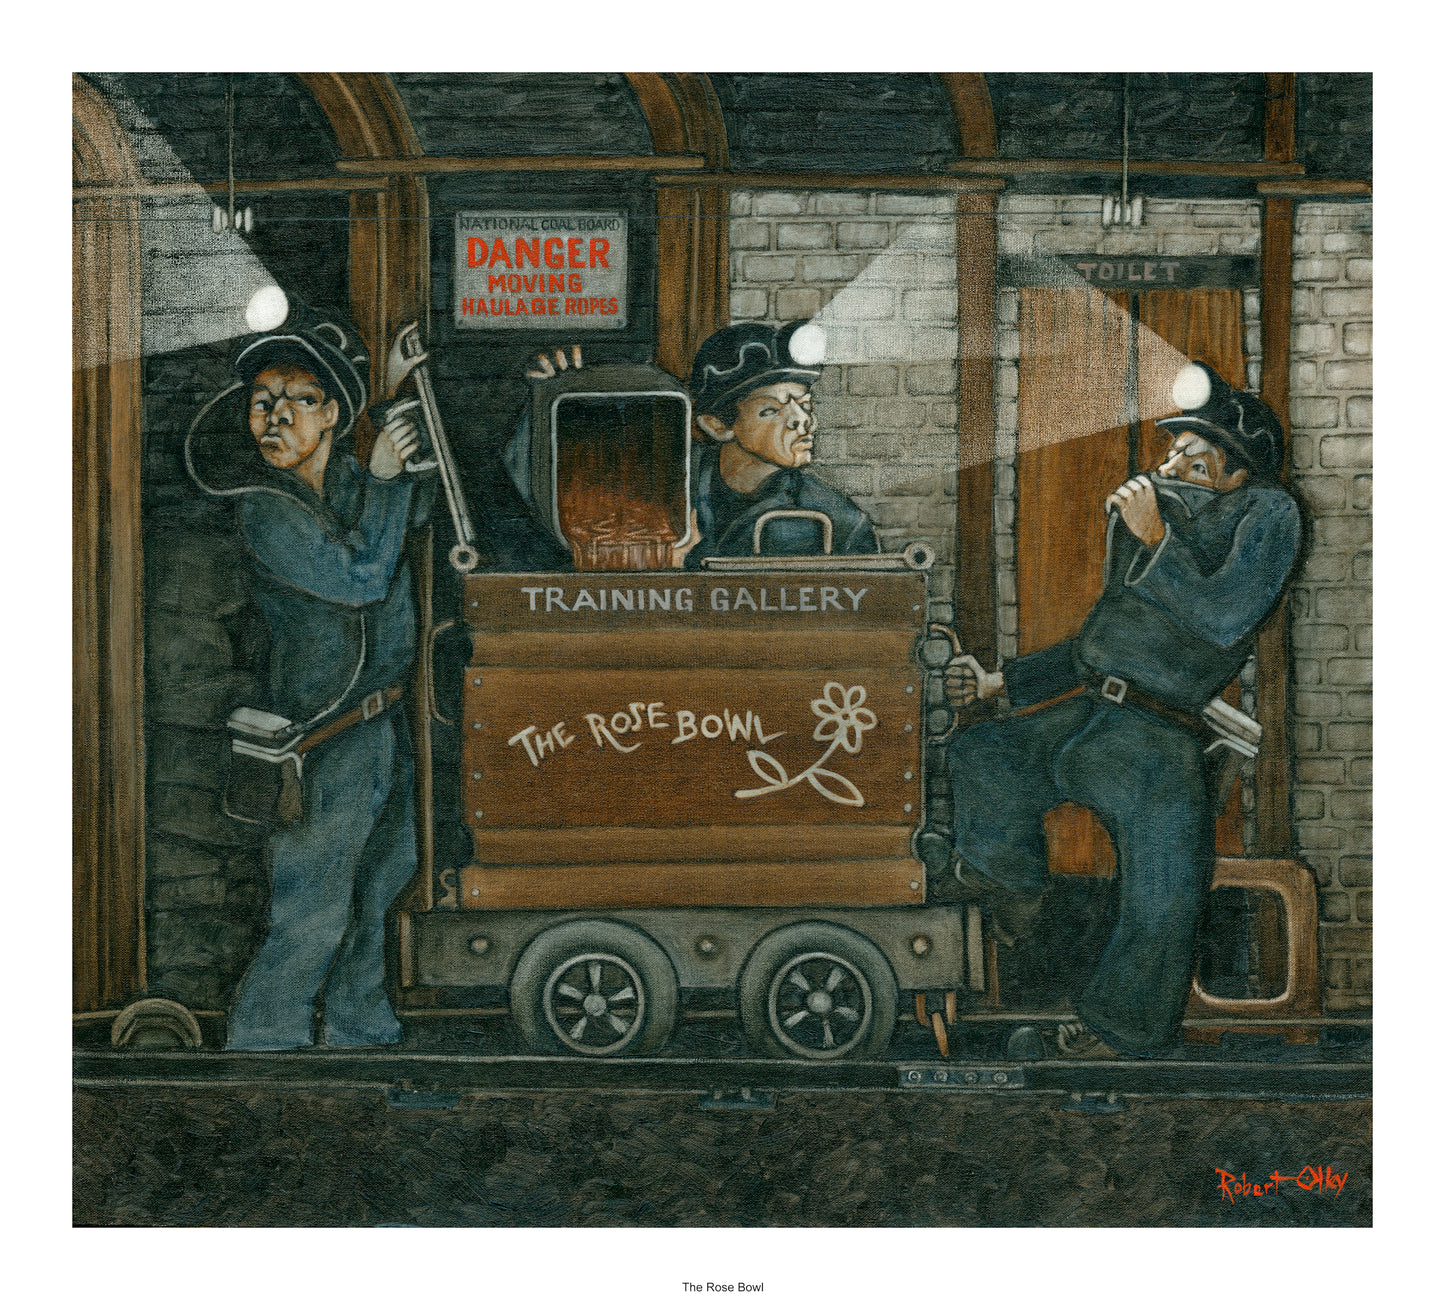 Coal Mining Prints - The Rose Bowl